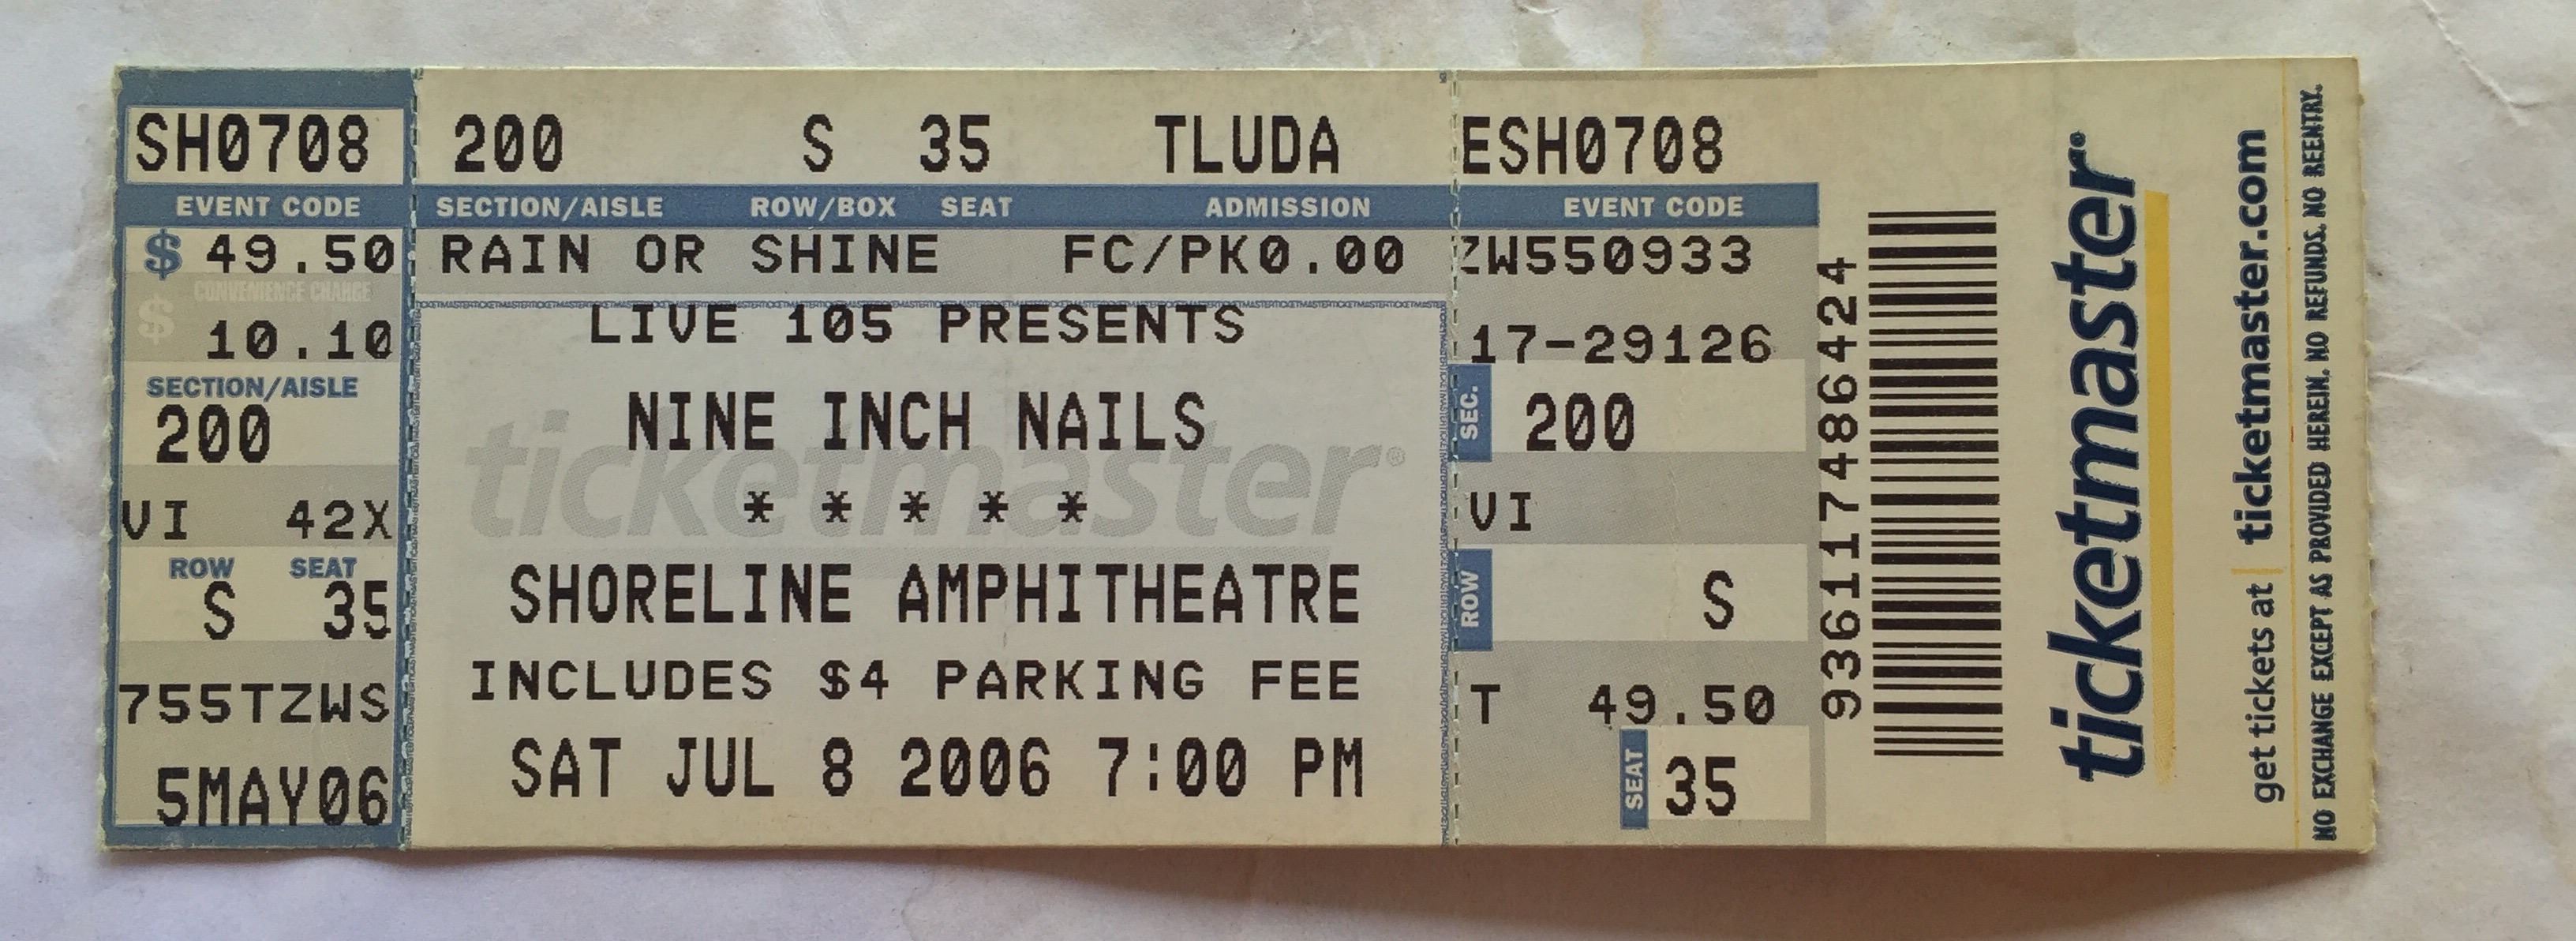 2006/07/08 Ticket